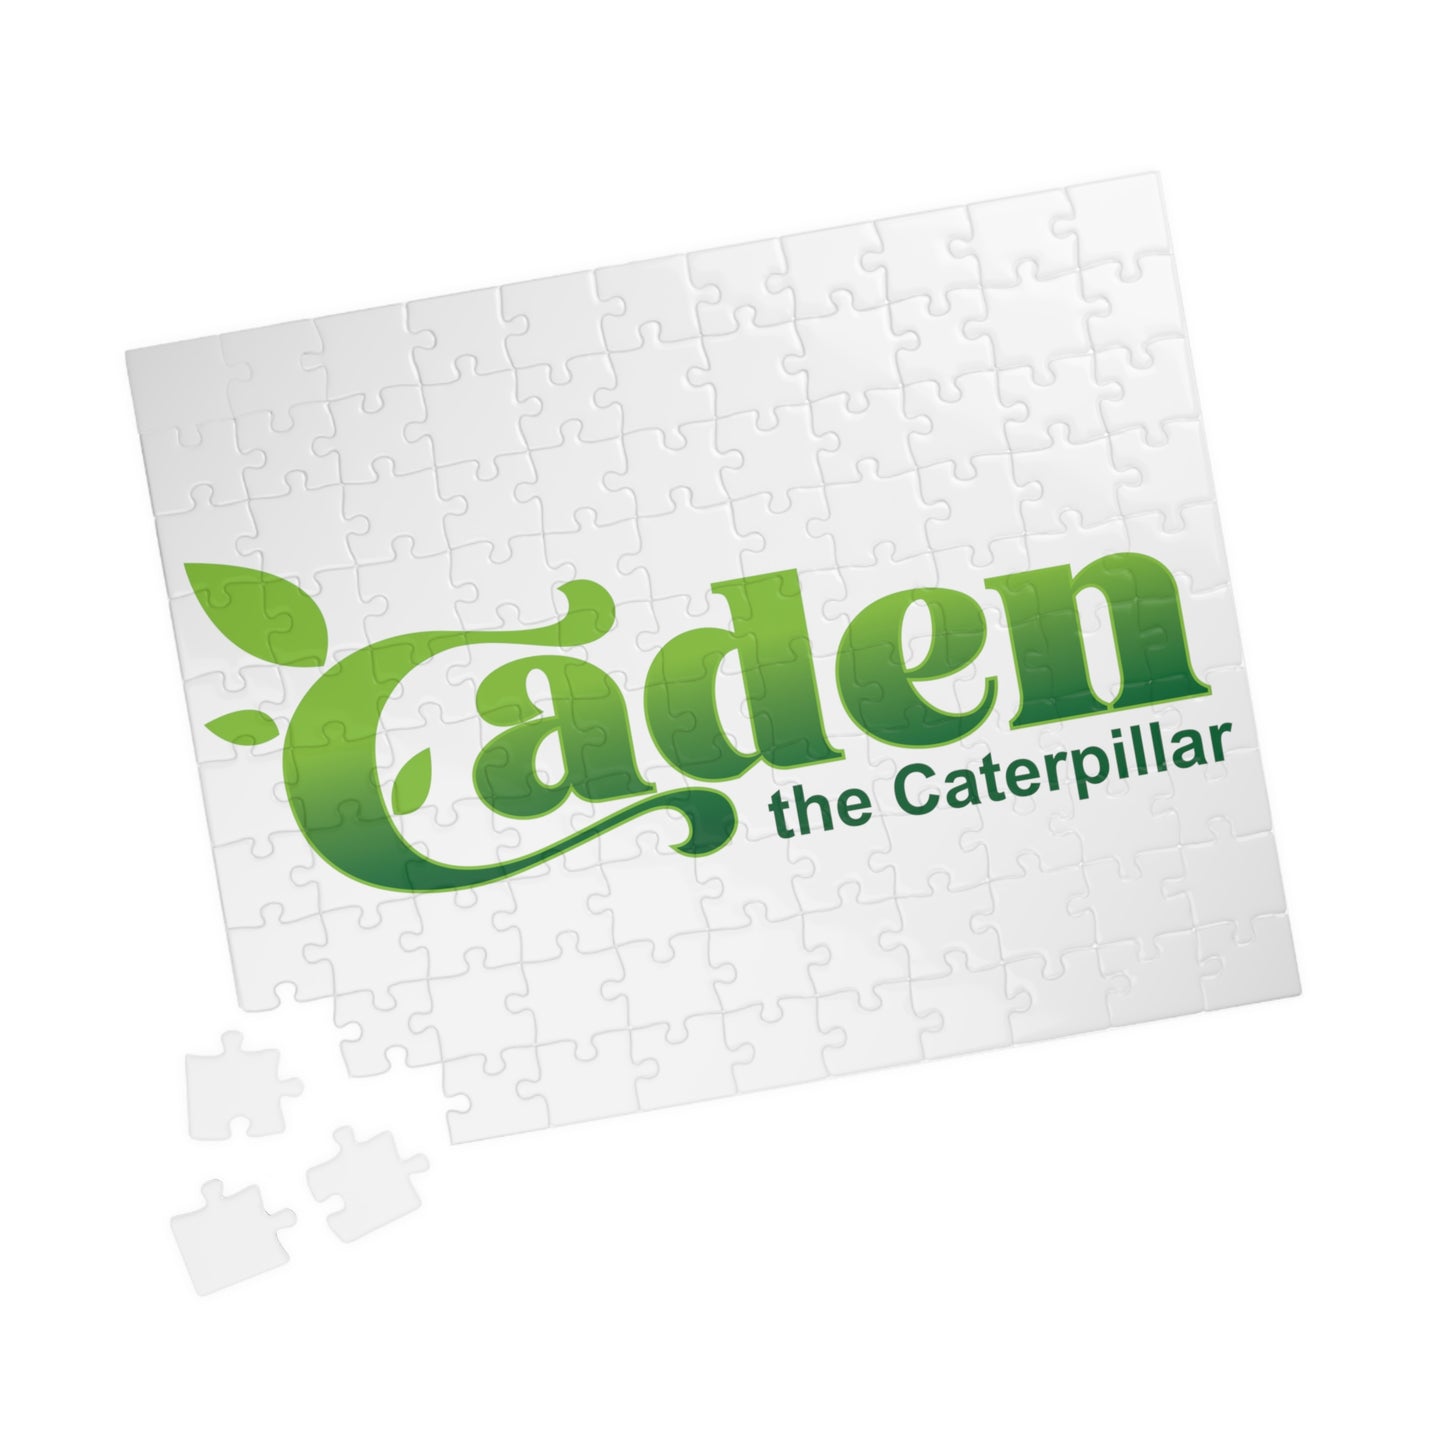 Caden Kids Puzzle (110-piece)